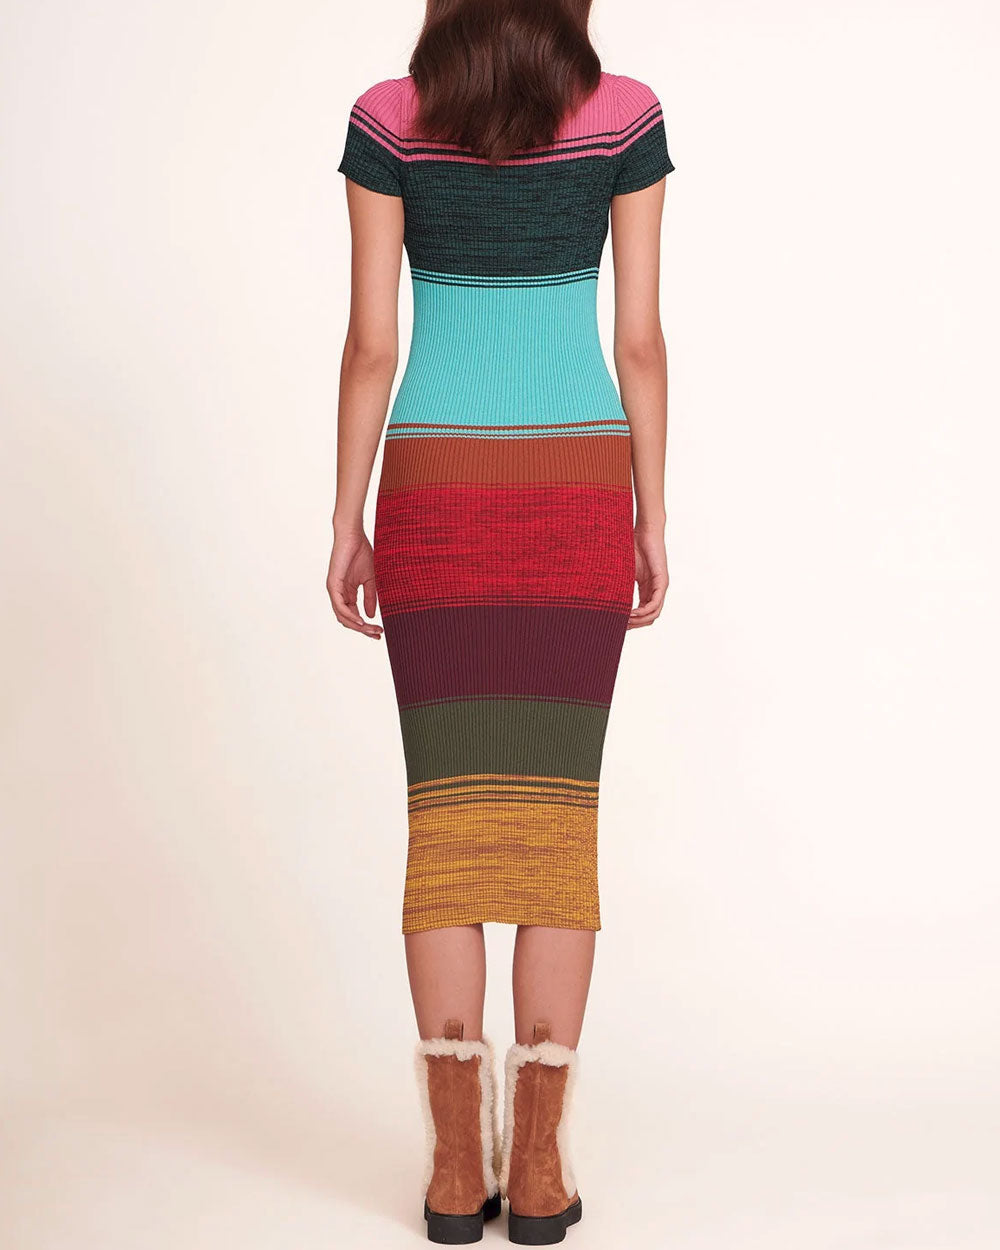 Mosaic Stripe Colleen Short Sleeve Dress